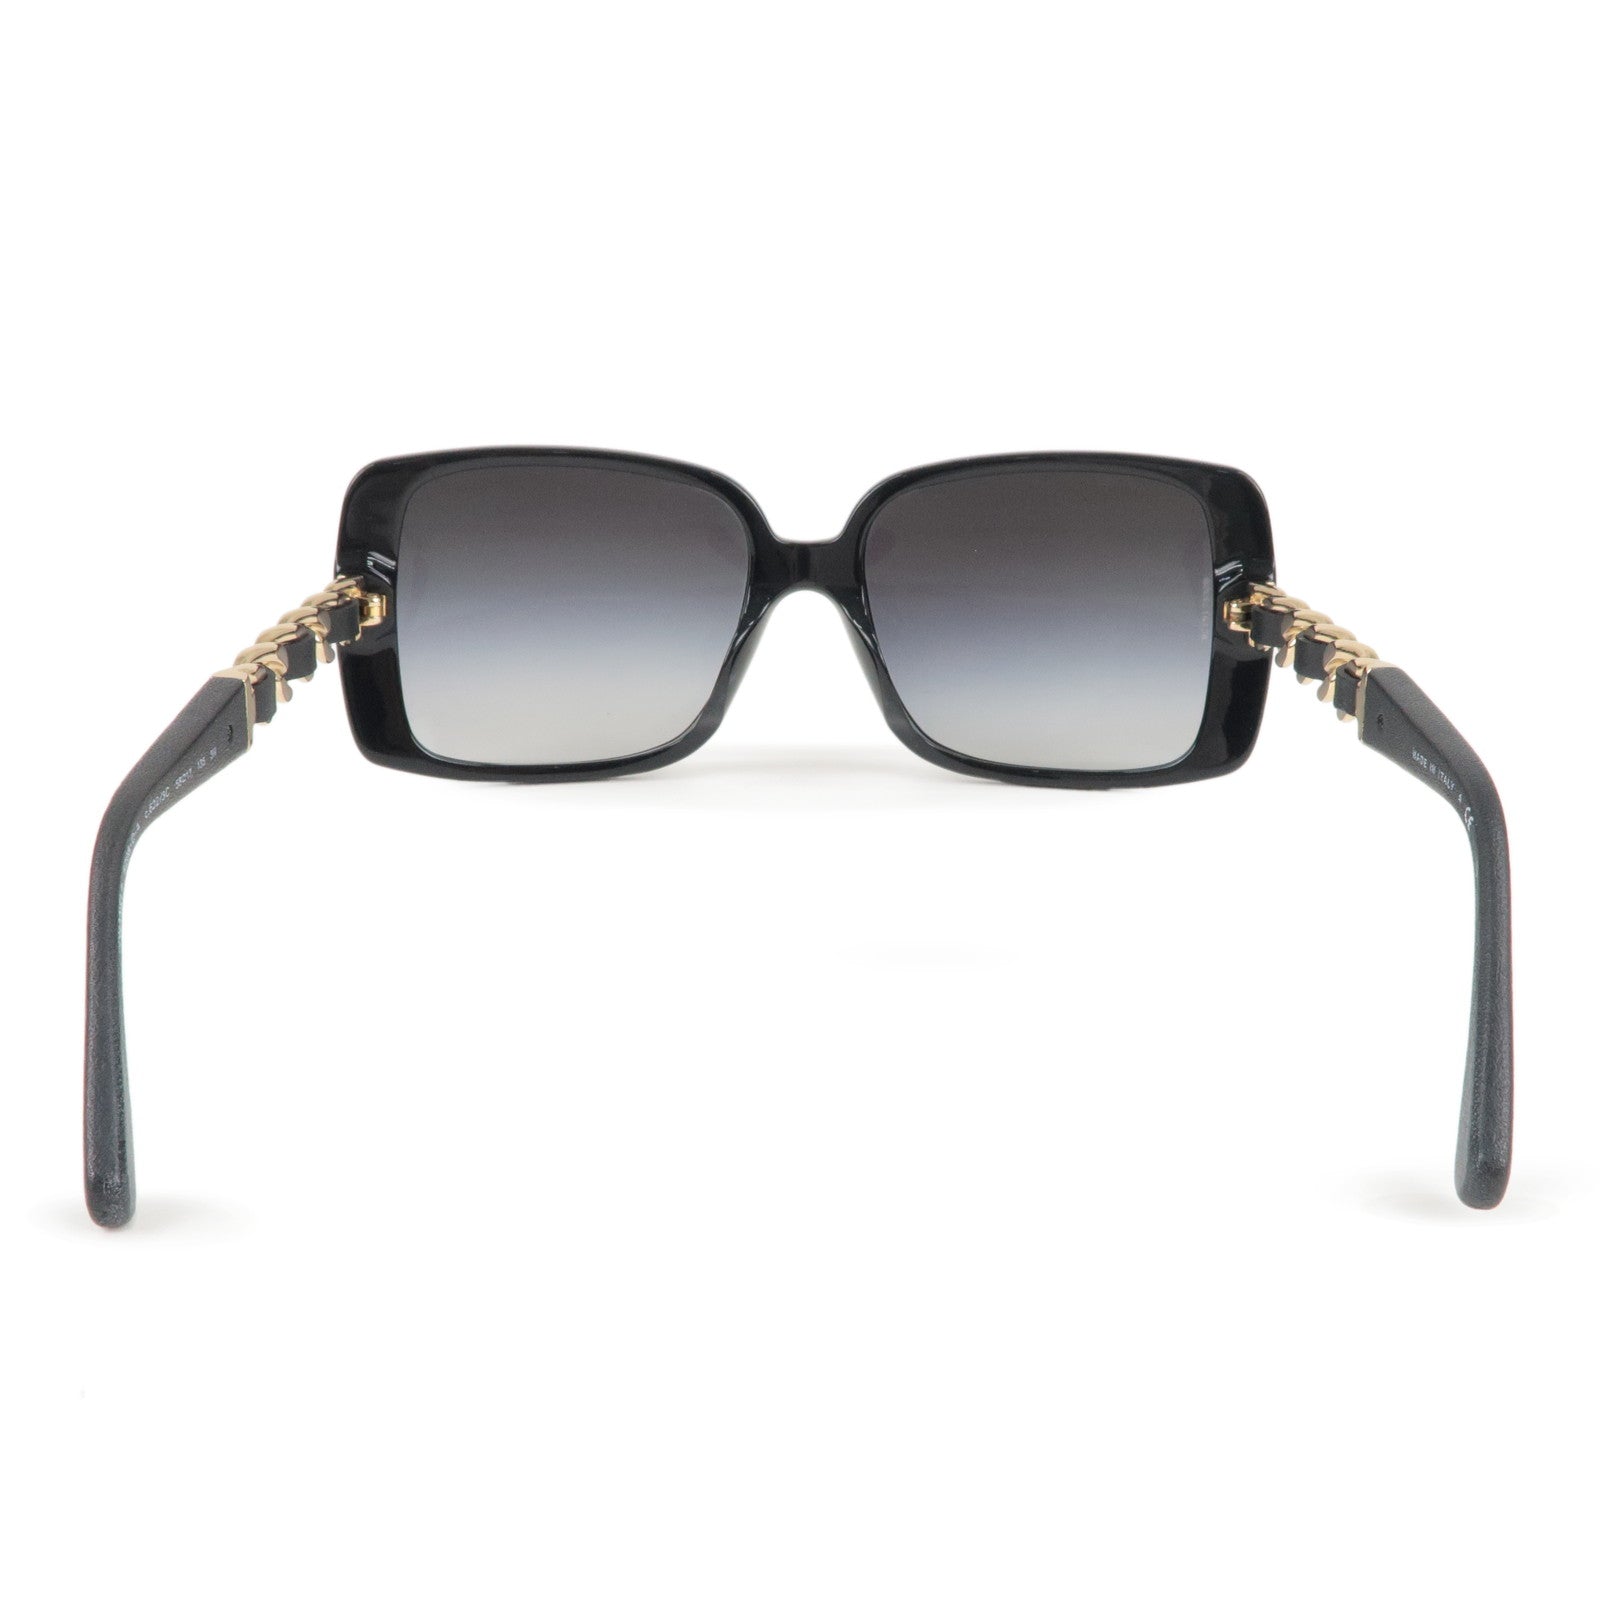 sunglasses chanel black leather